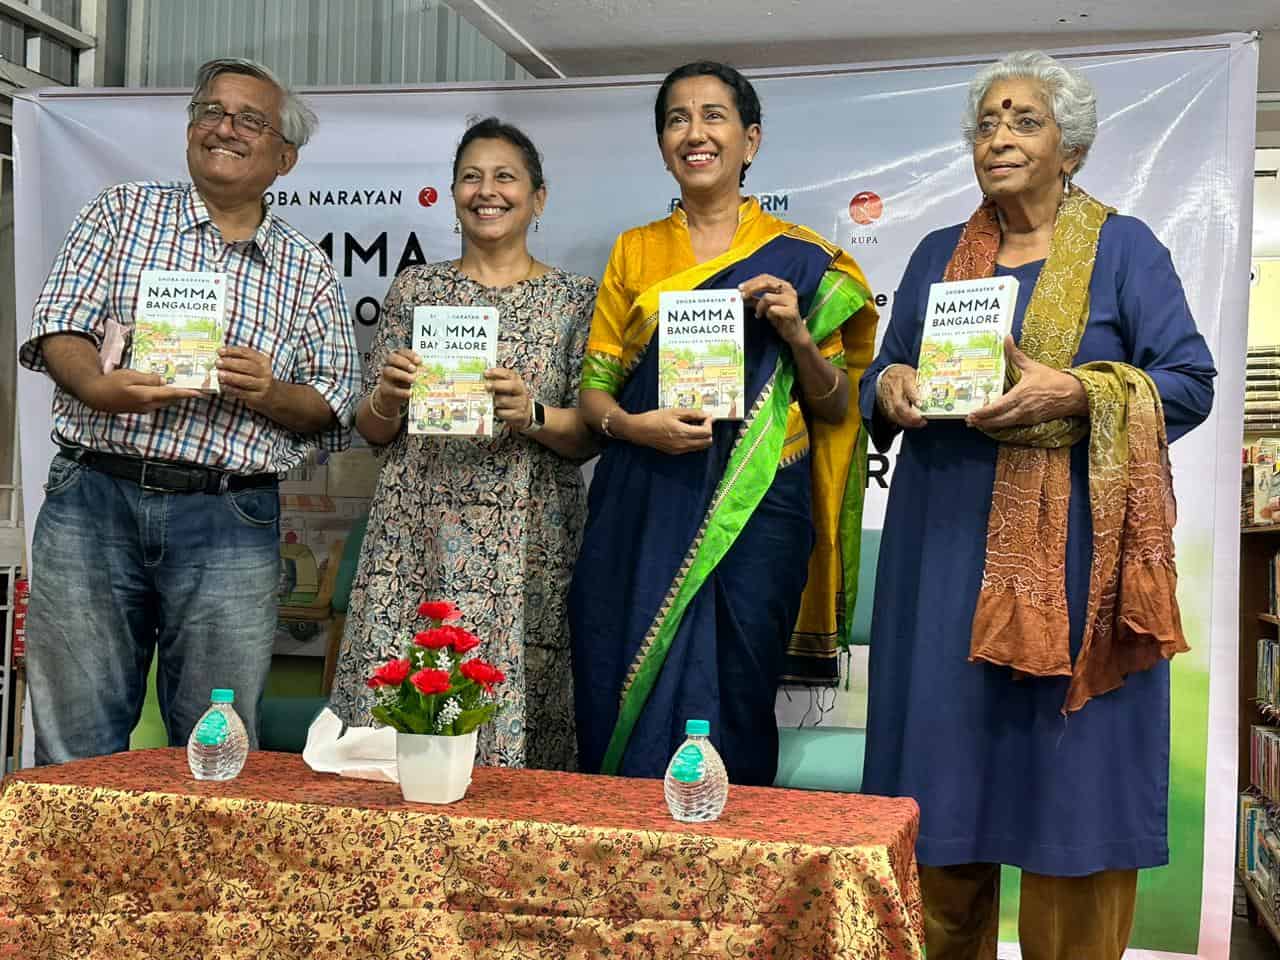 Namma Bangalore Bookworm Launch